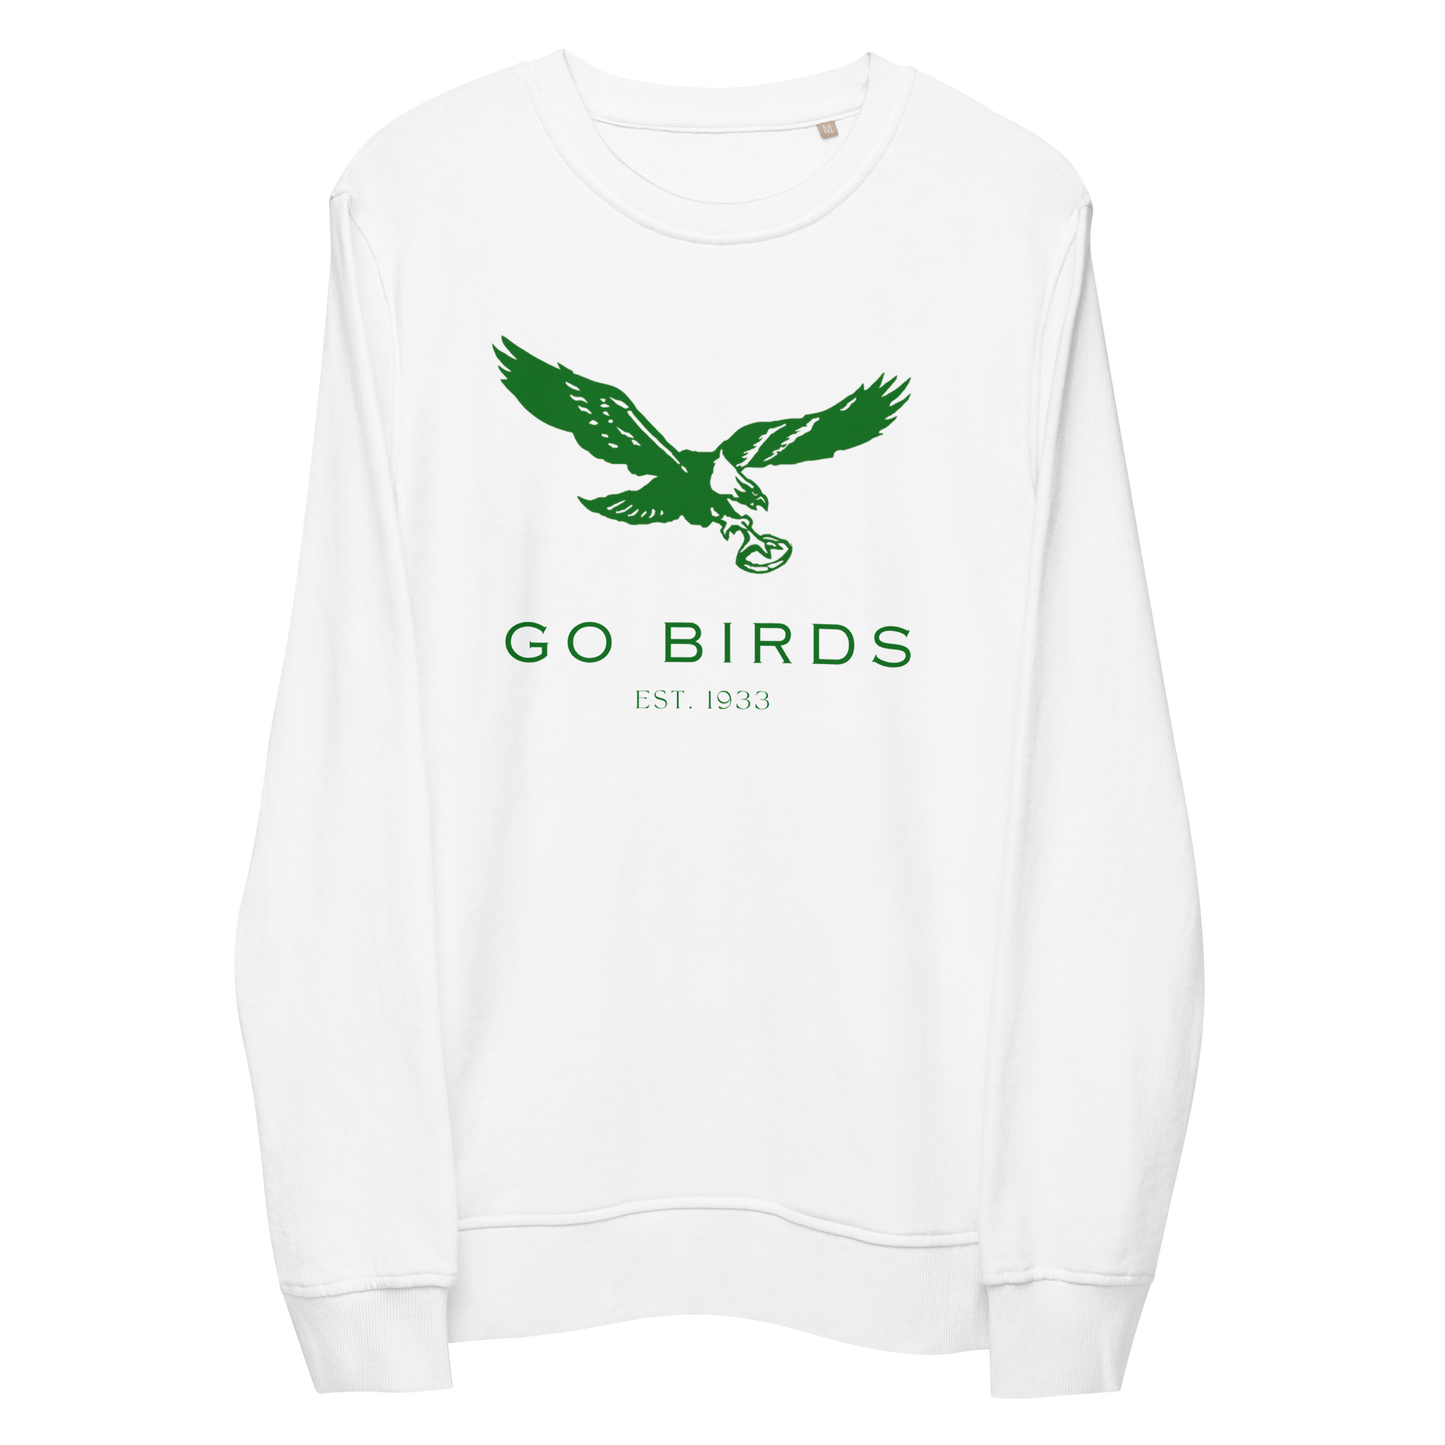 GO BIRDS - Vintage Organic Crew